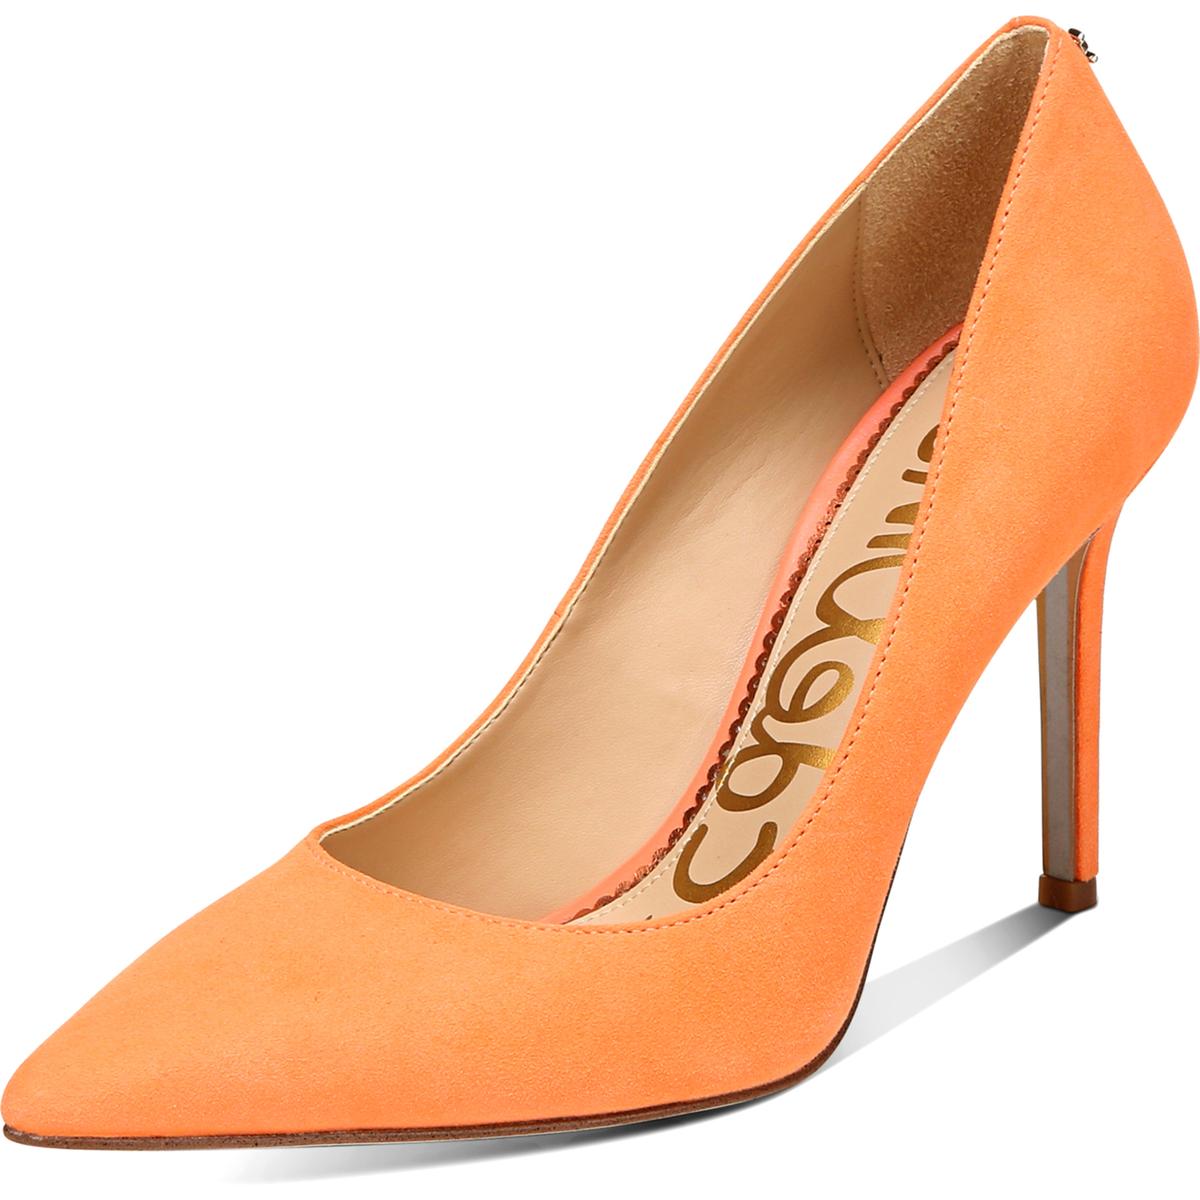 Sam Edelman Womens Hazel Orange Suede Pumps Shoes 6.5 Medium (B,M) BHFO ...